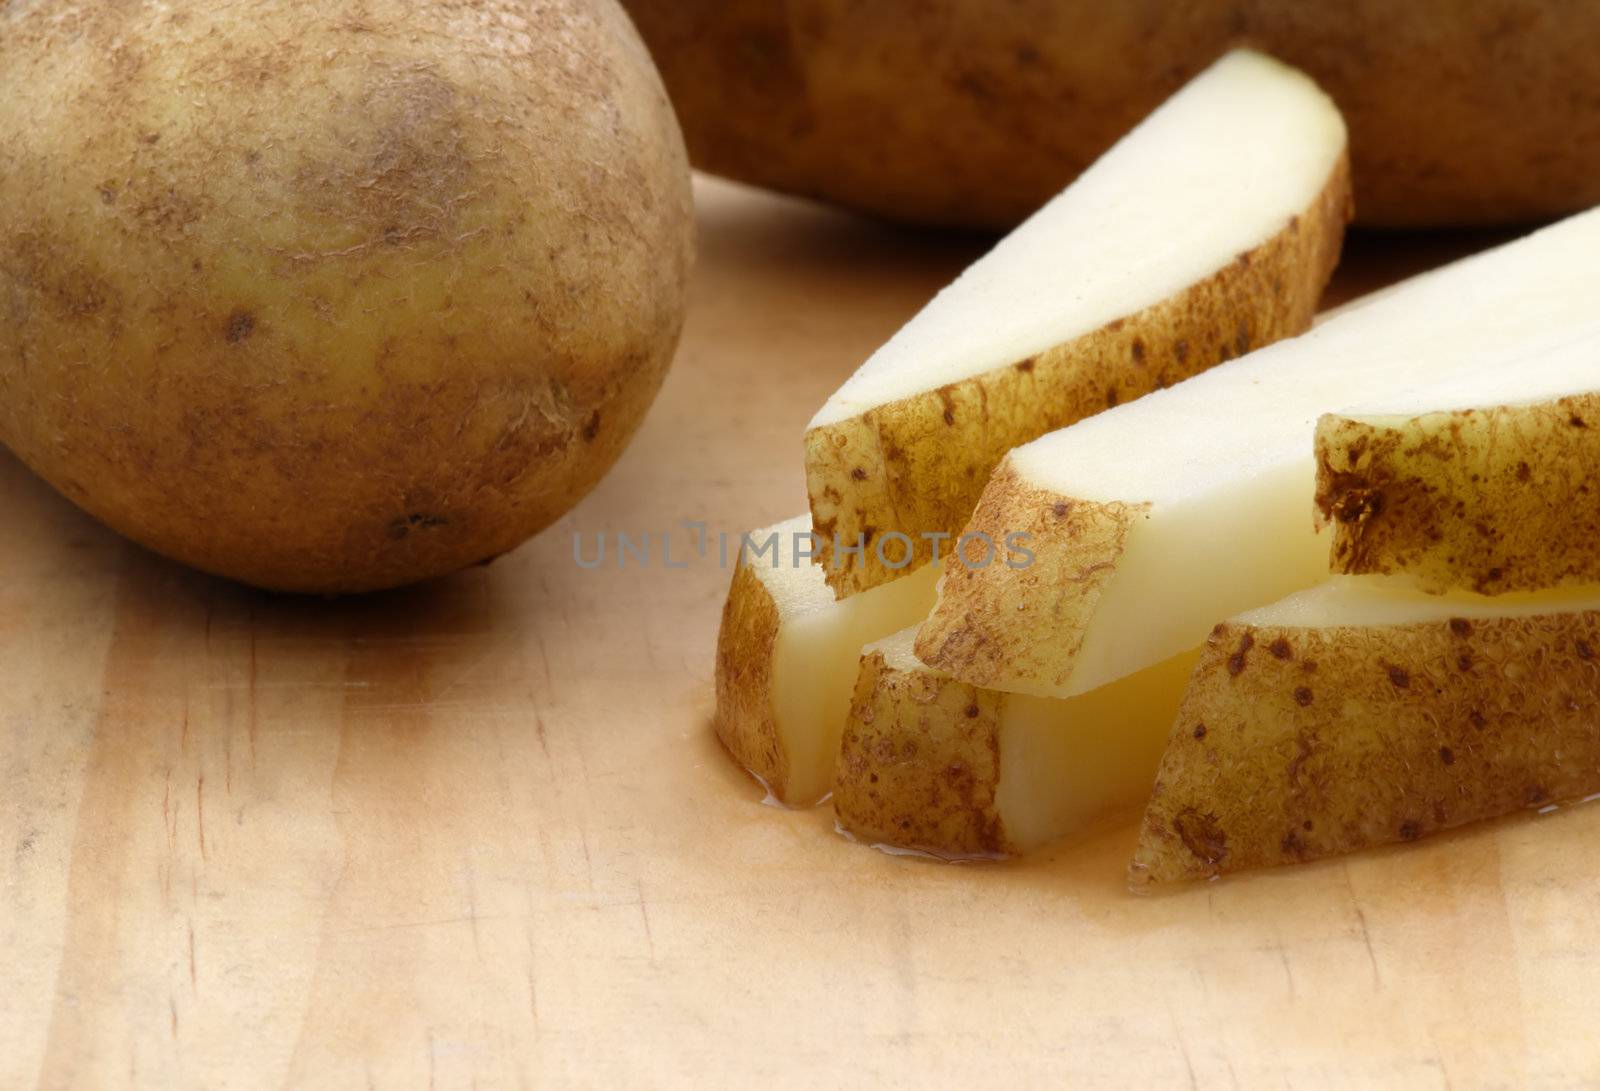 Fresh cut potatoes by carterphoto